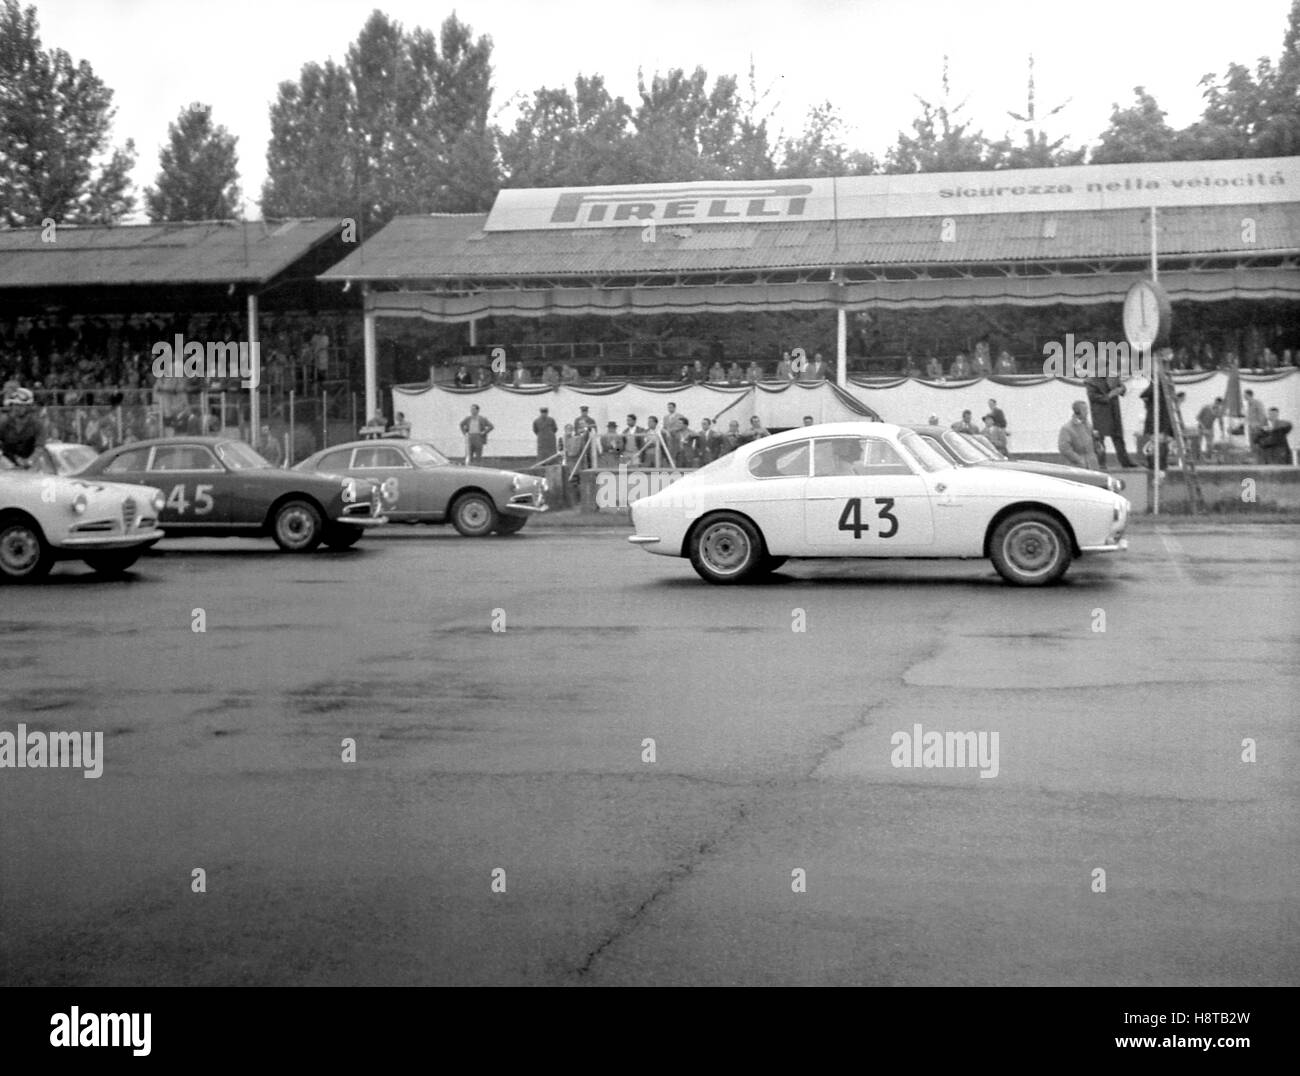 1956 ITALIAN GP TOURING CARS GRID 2 Stock Photo